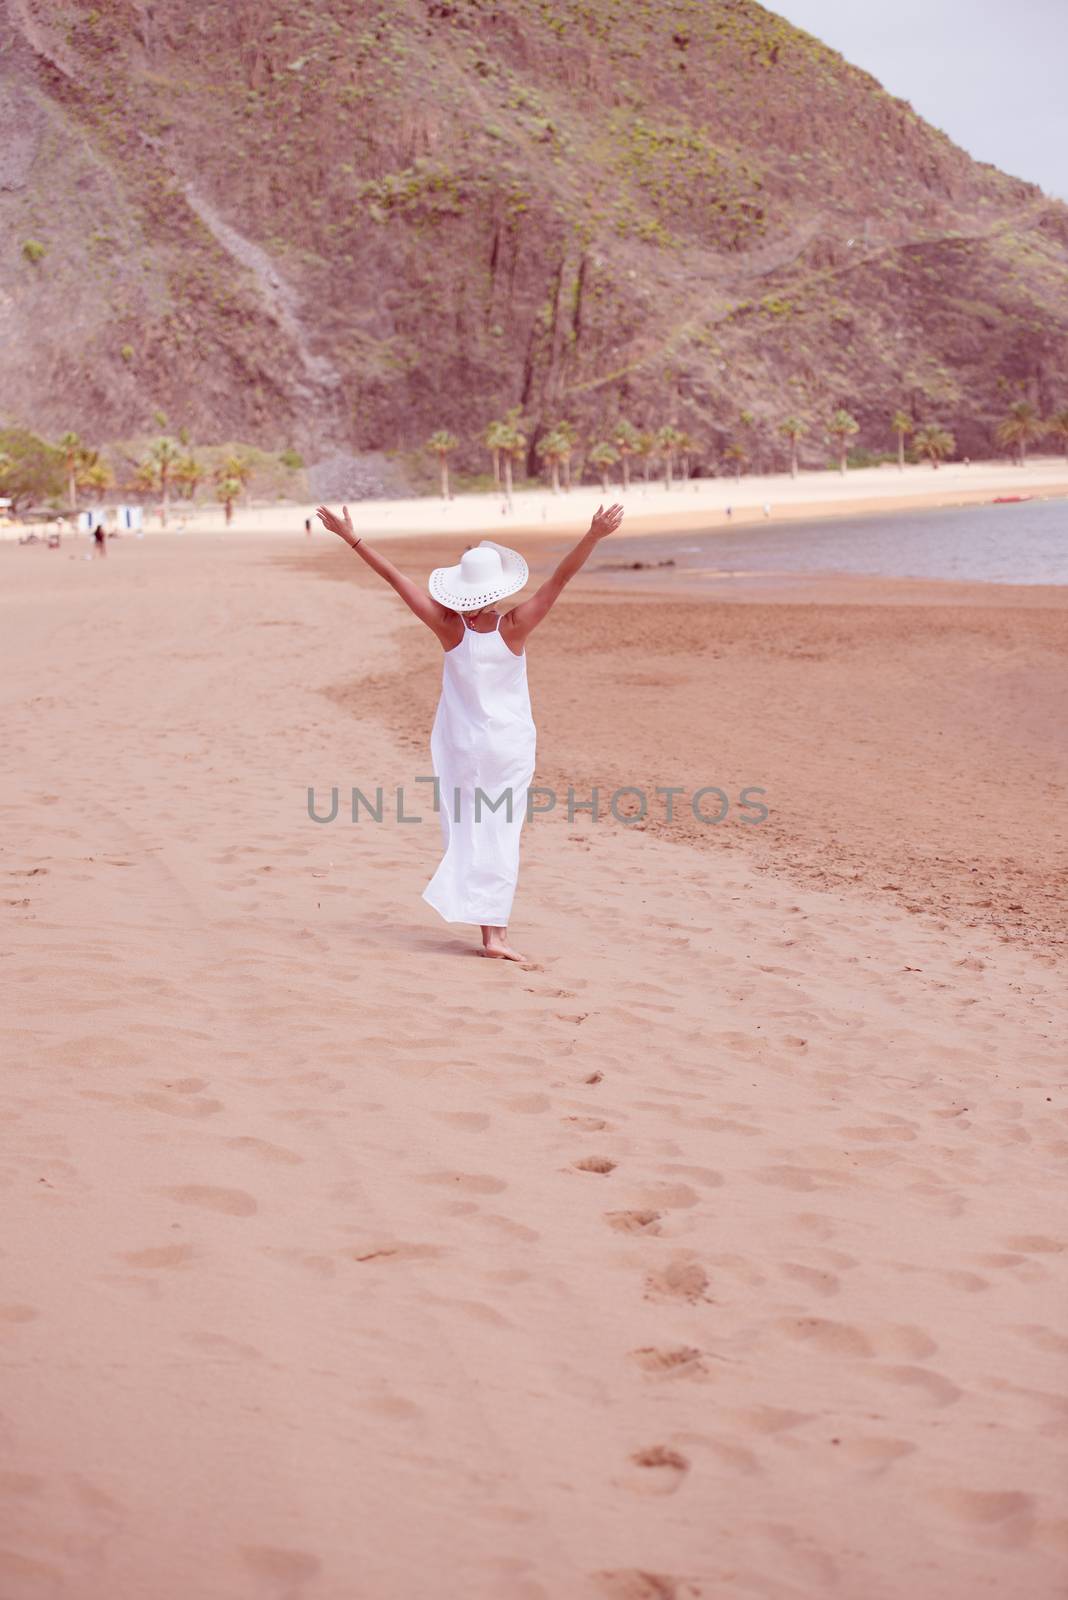 Model in white dress and hat enjoying walk on sandy beach